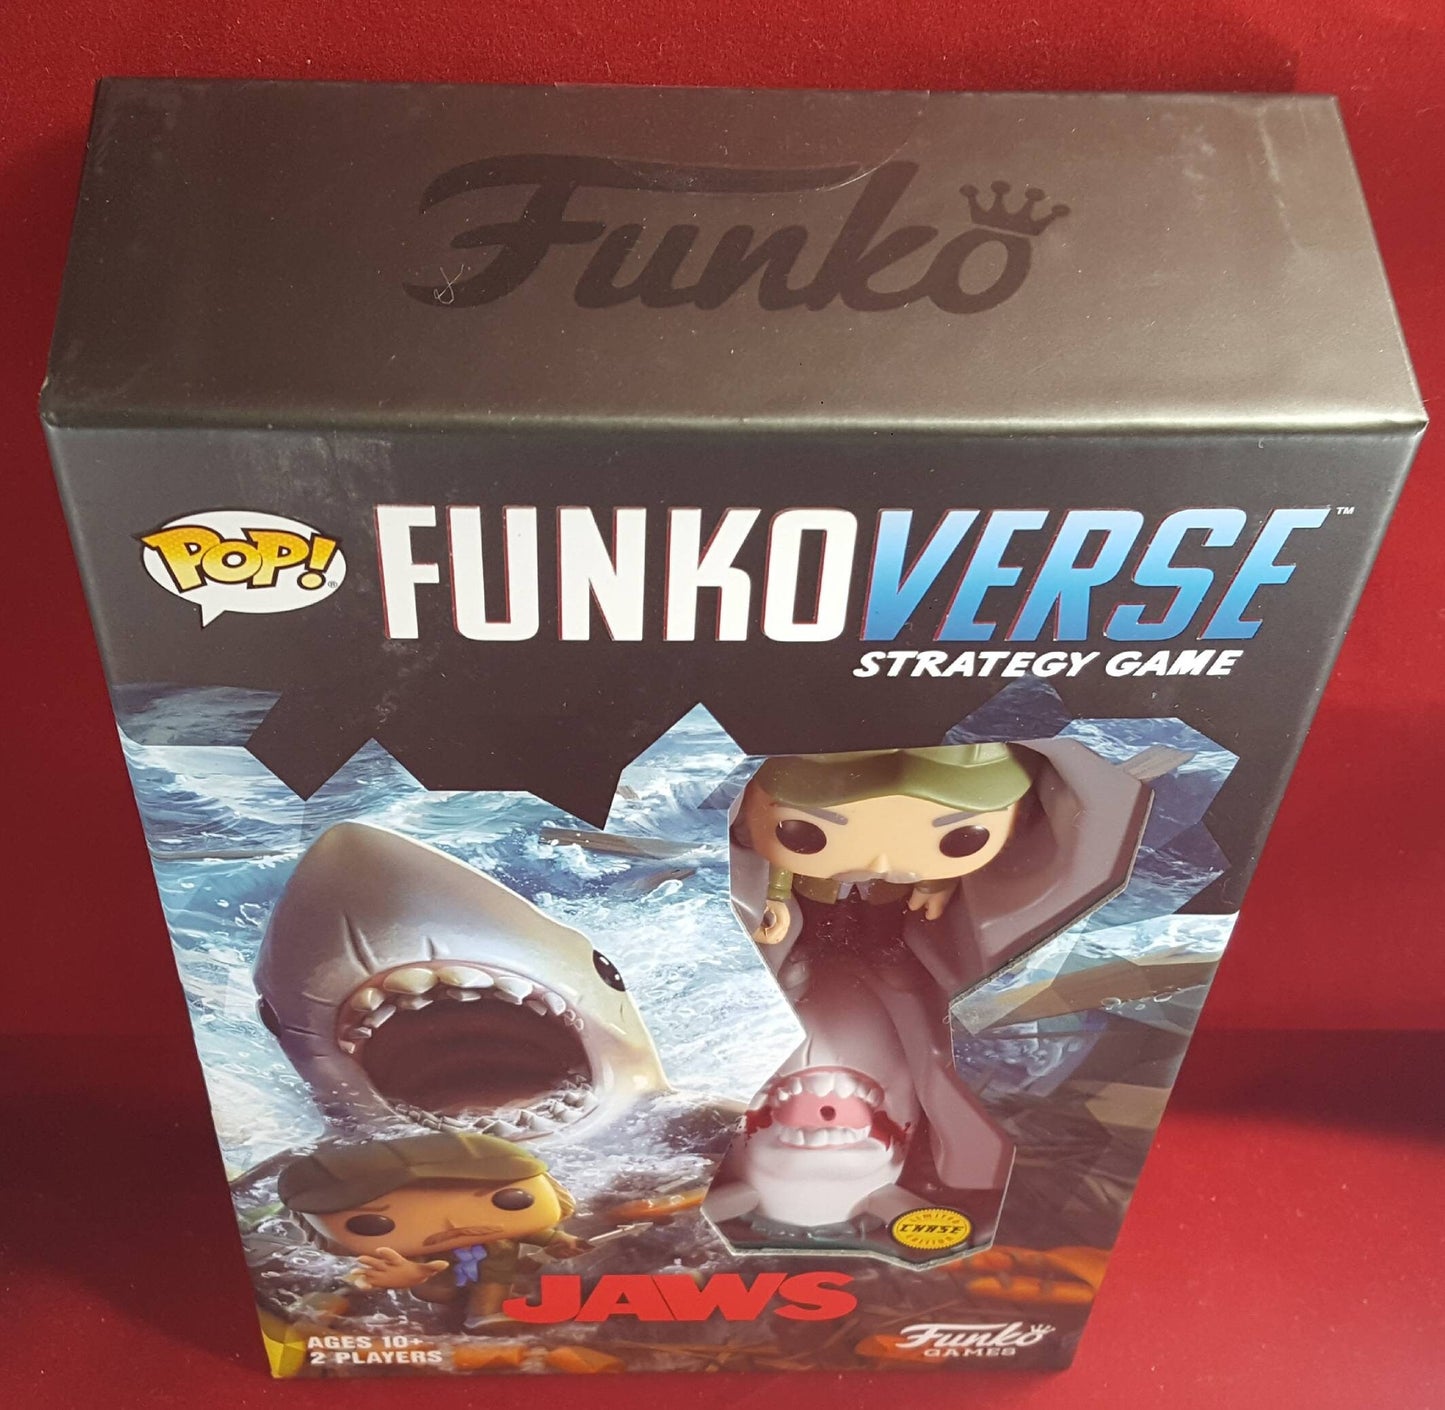 Jaws Chase funko verse strategy game NIB